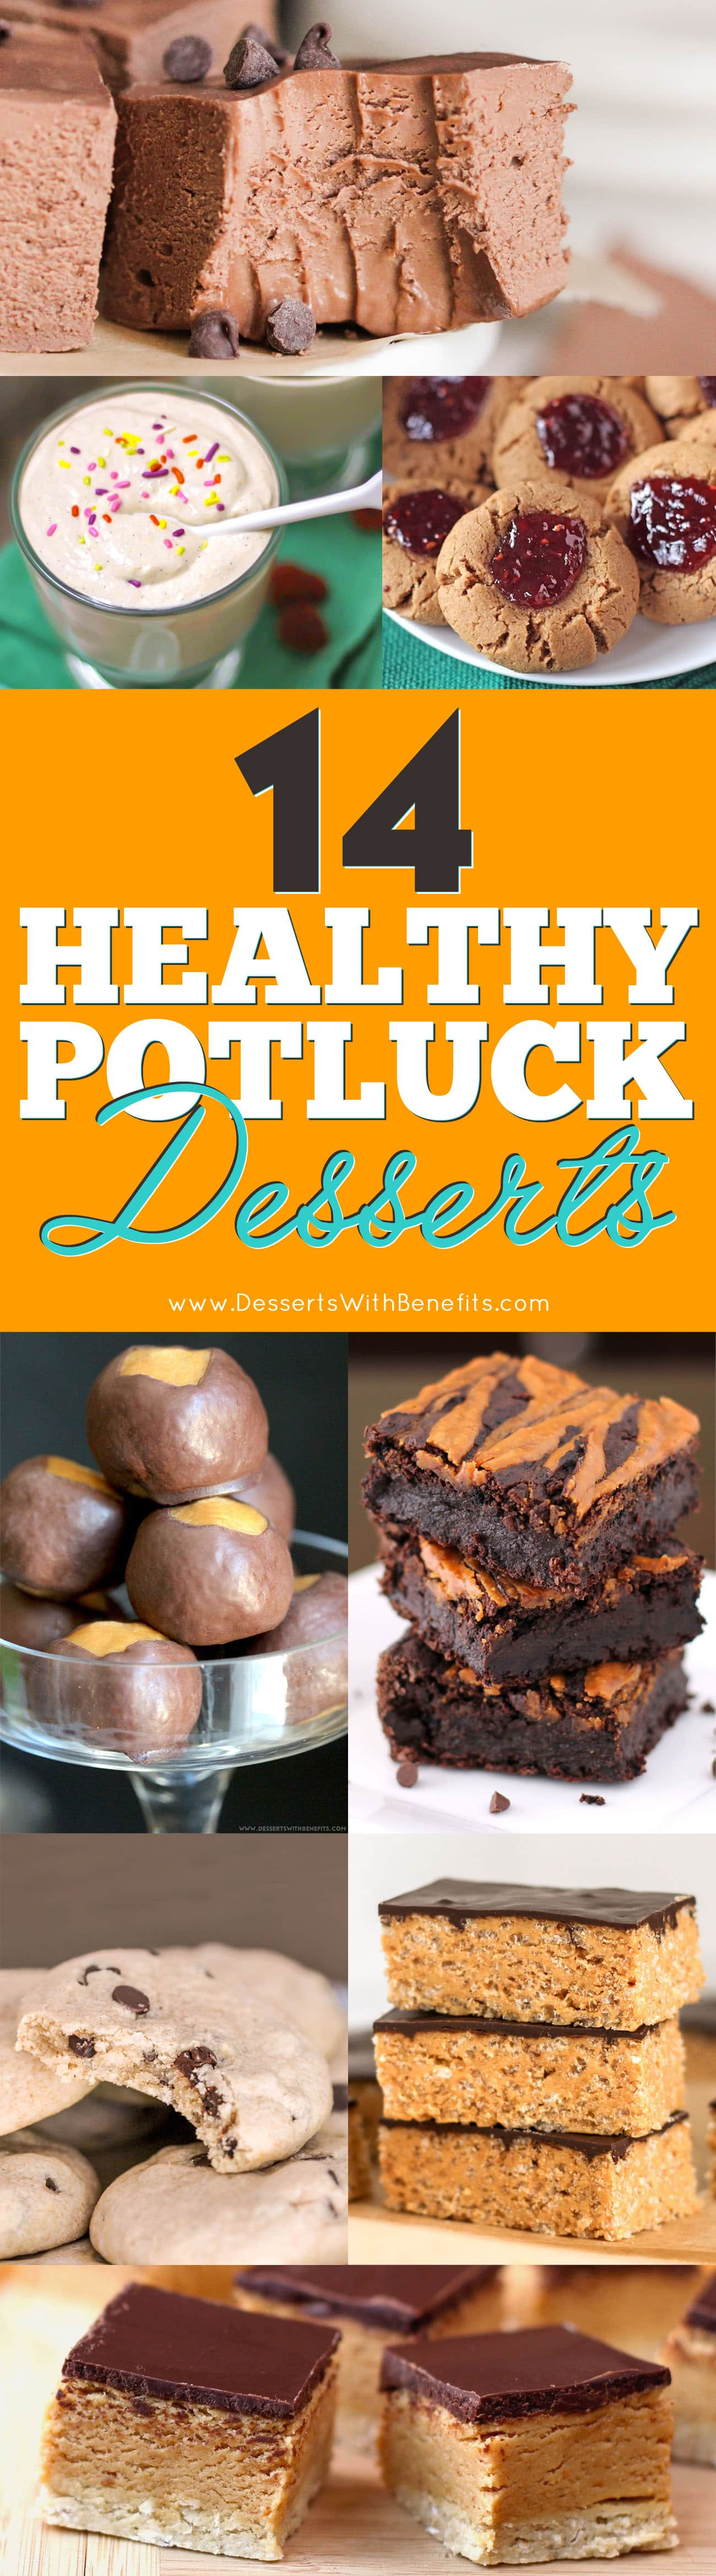 Healthy Potluck Desserts
 Top 14 Healthy Potluck Dessert Recipes with Gluten Free